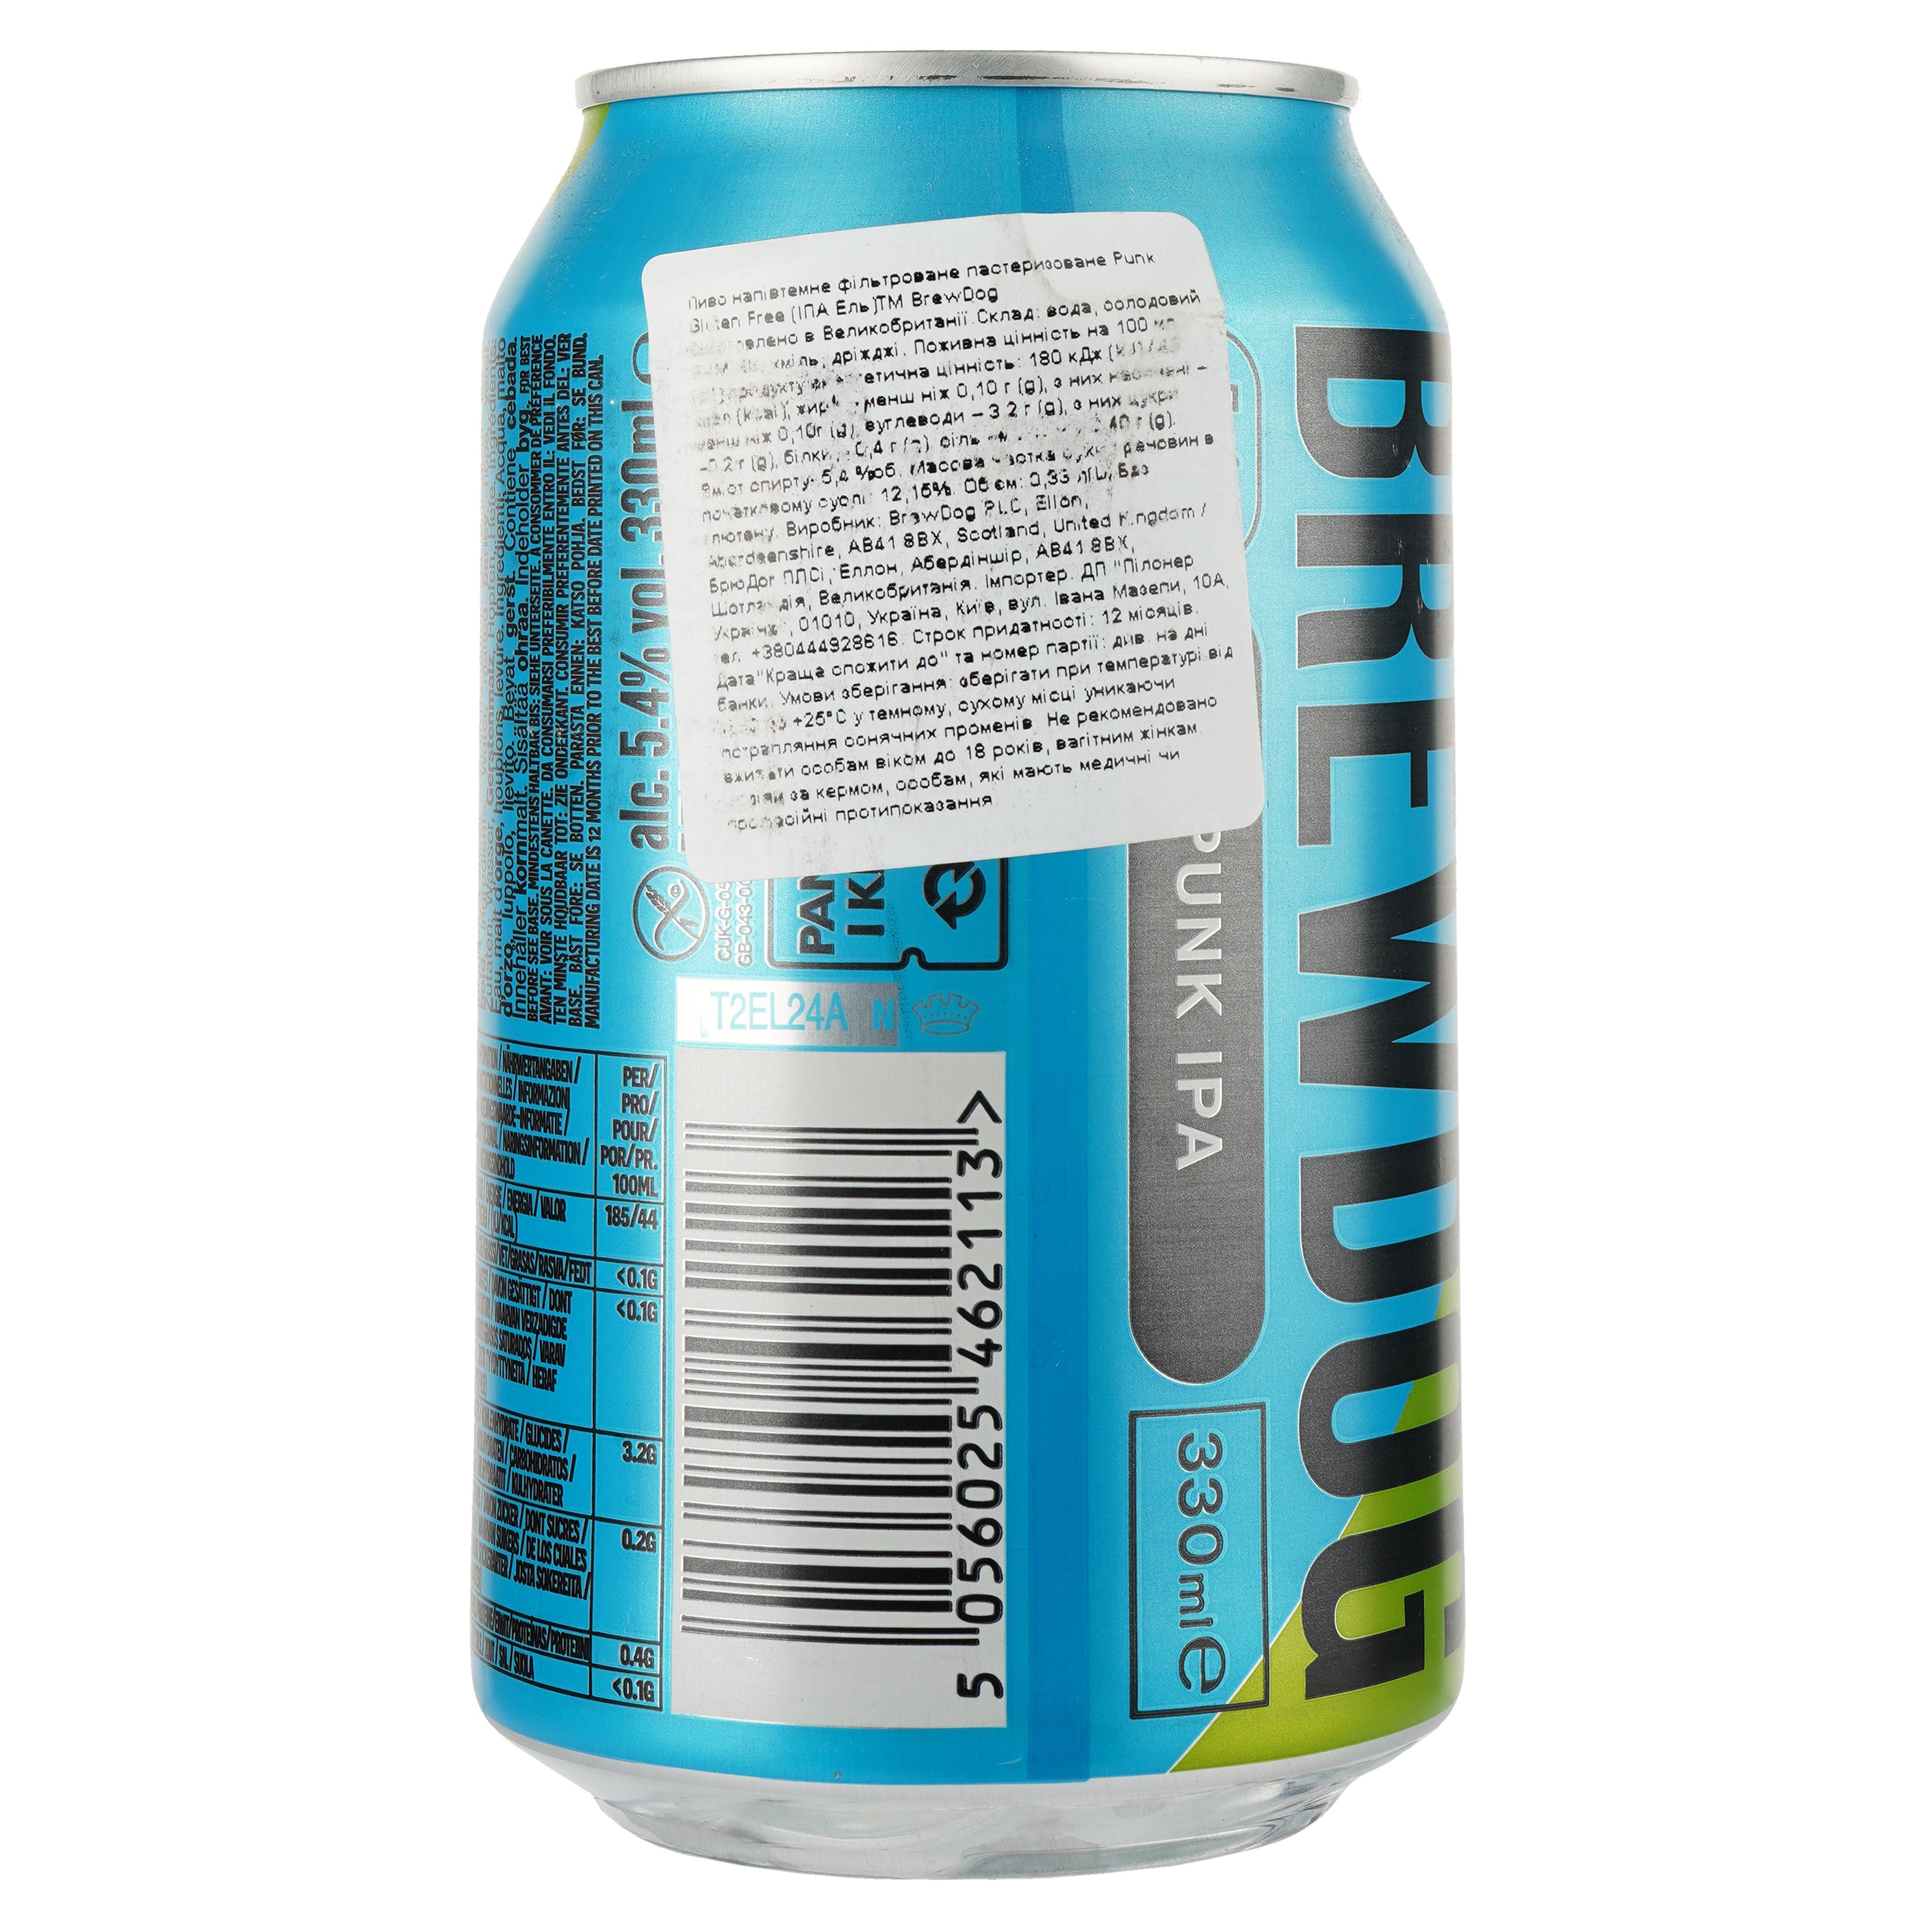 Пиво BrewDog Punk IPA Gluten Free, светлое, 5,4%, ж/б, 0,33 л - фото 2